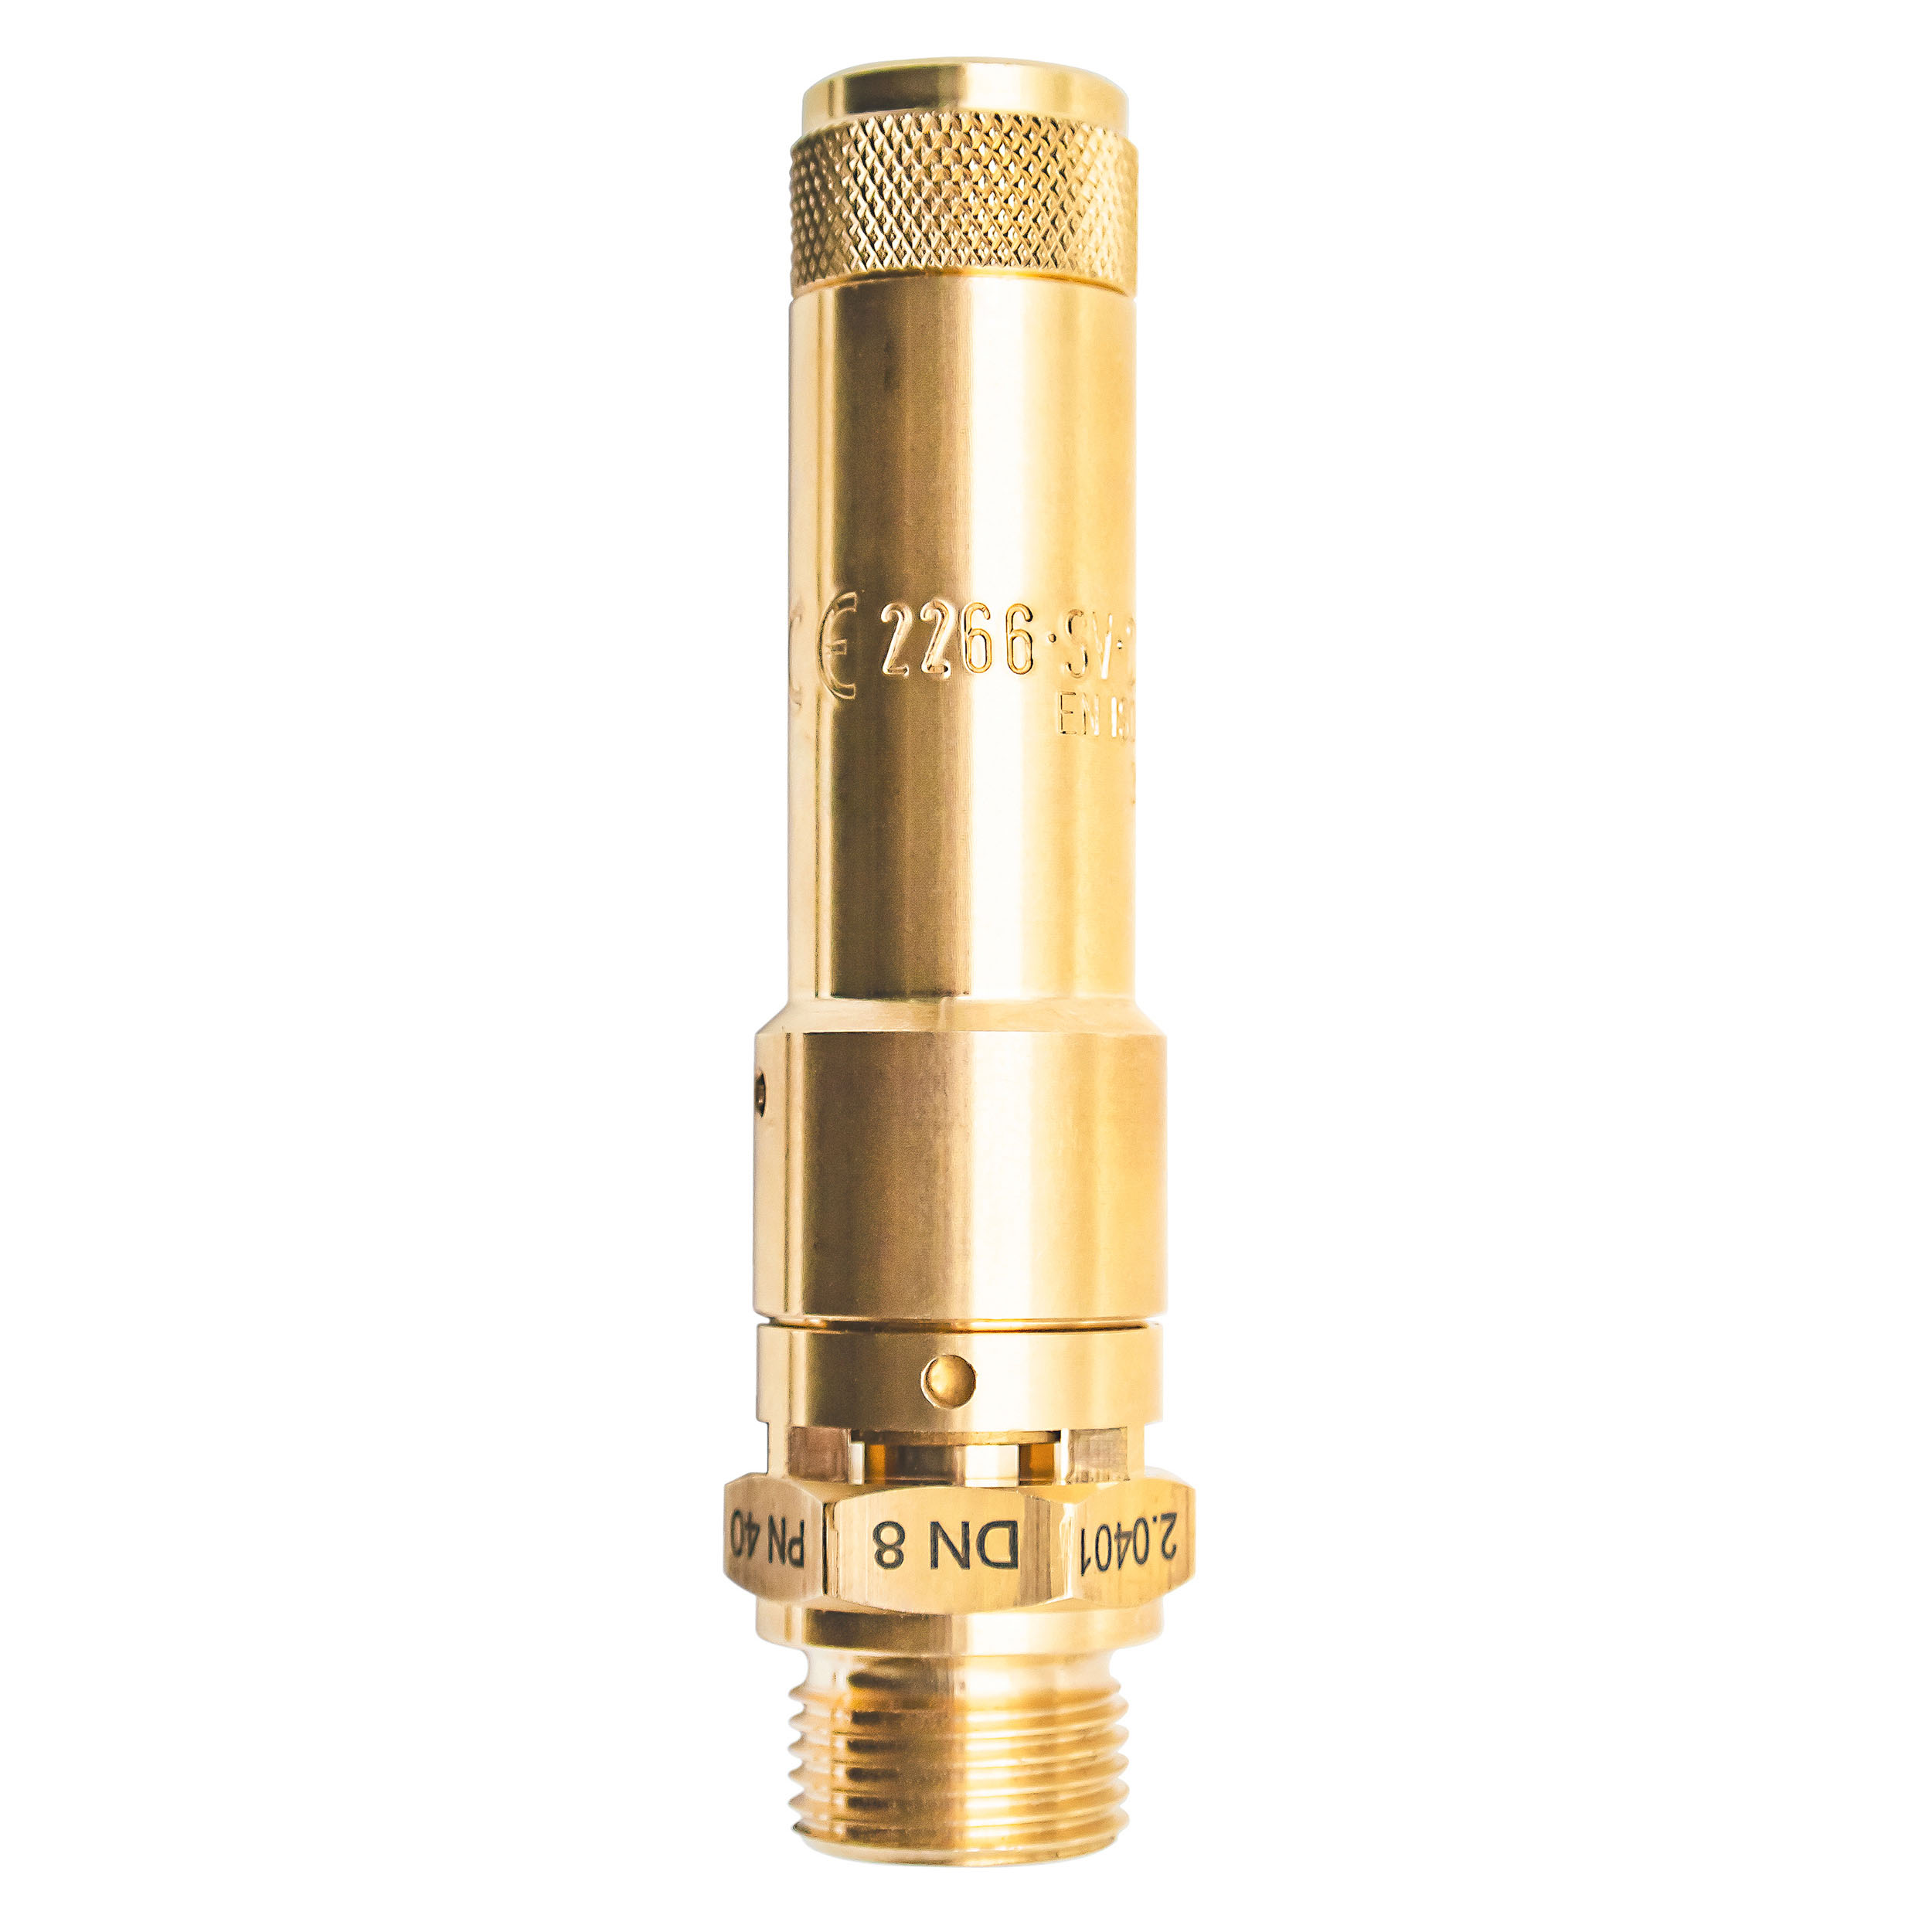 Savety valve component tested DN 8, G⅜, set pressure: 4.6 bar (66,7 psi)